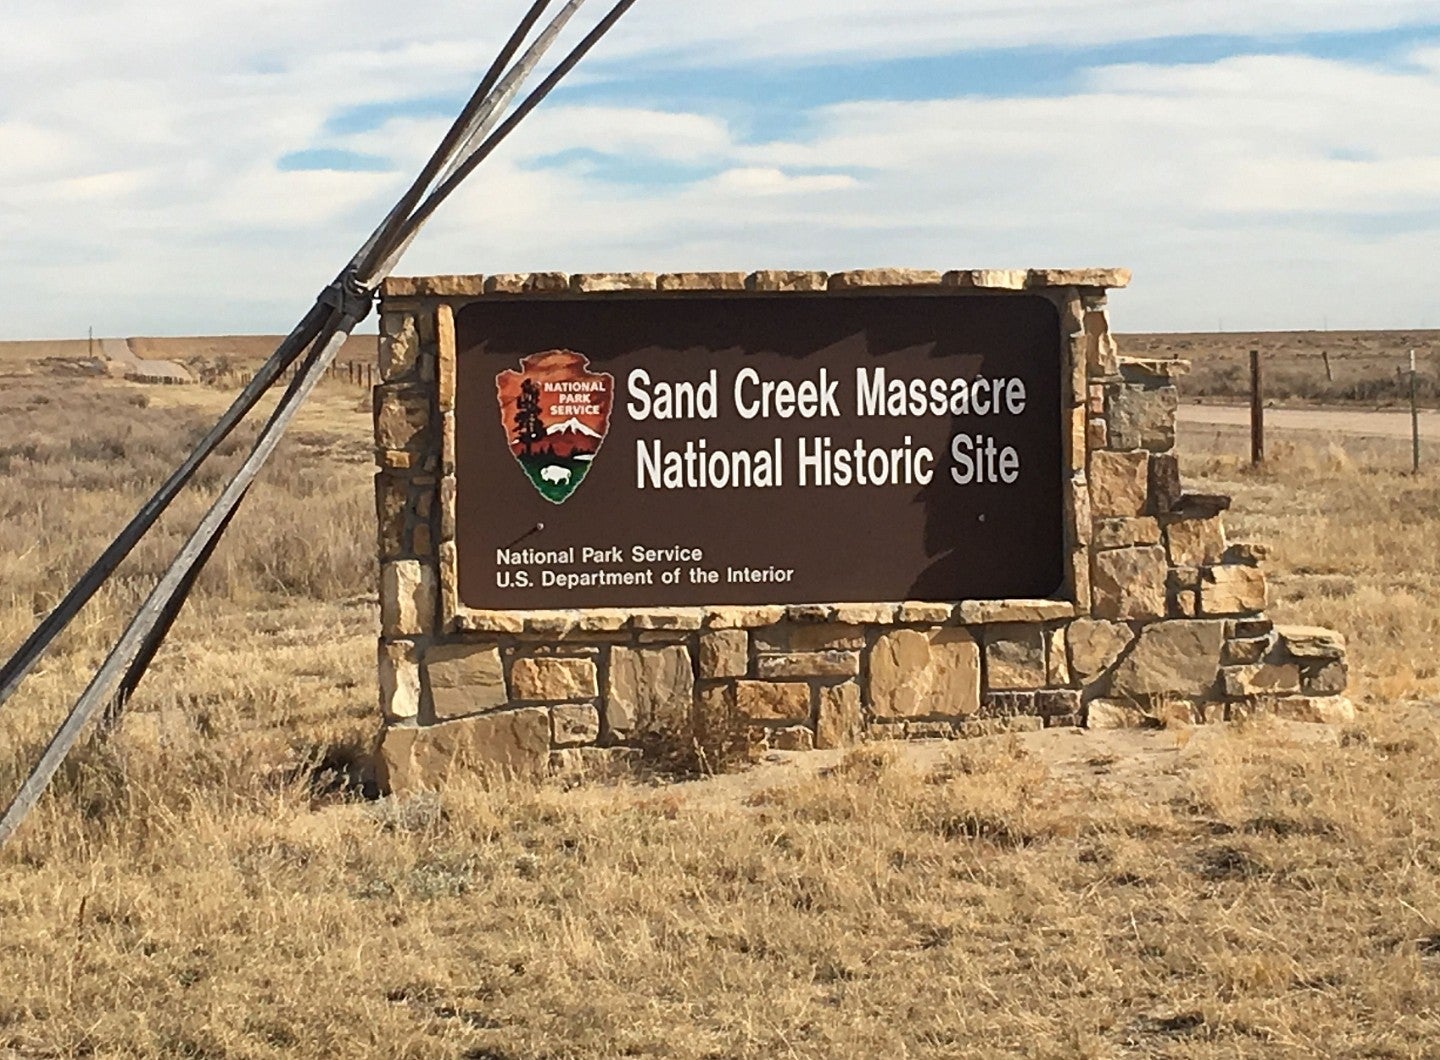 sign for Sand Creek Massacre national historic site in empty grass landscape